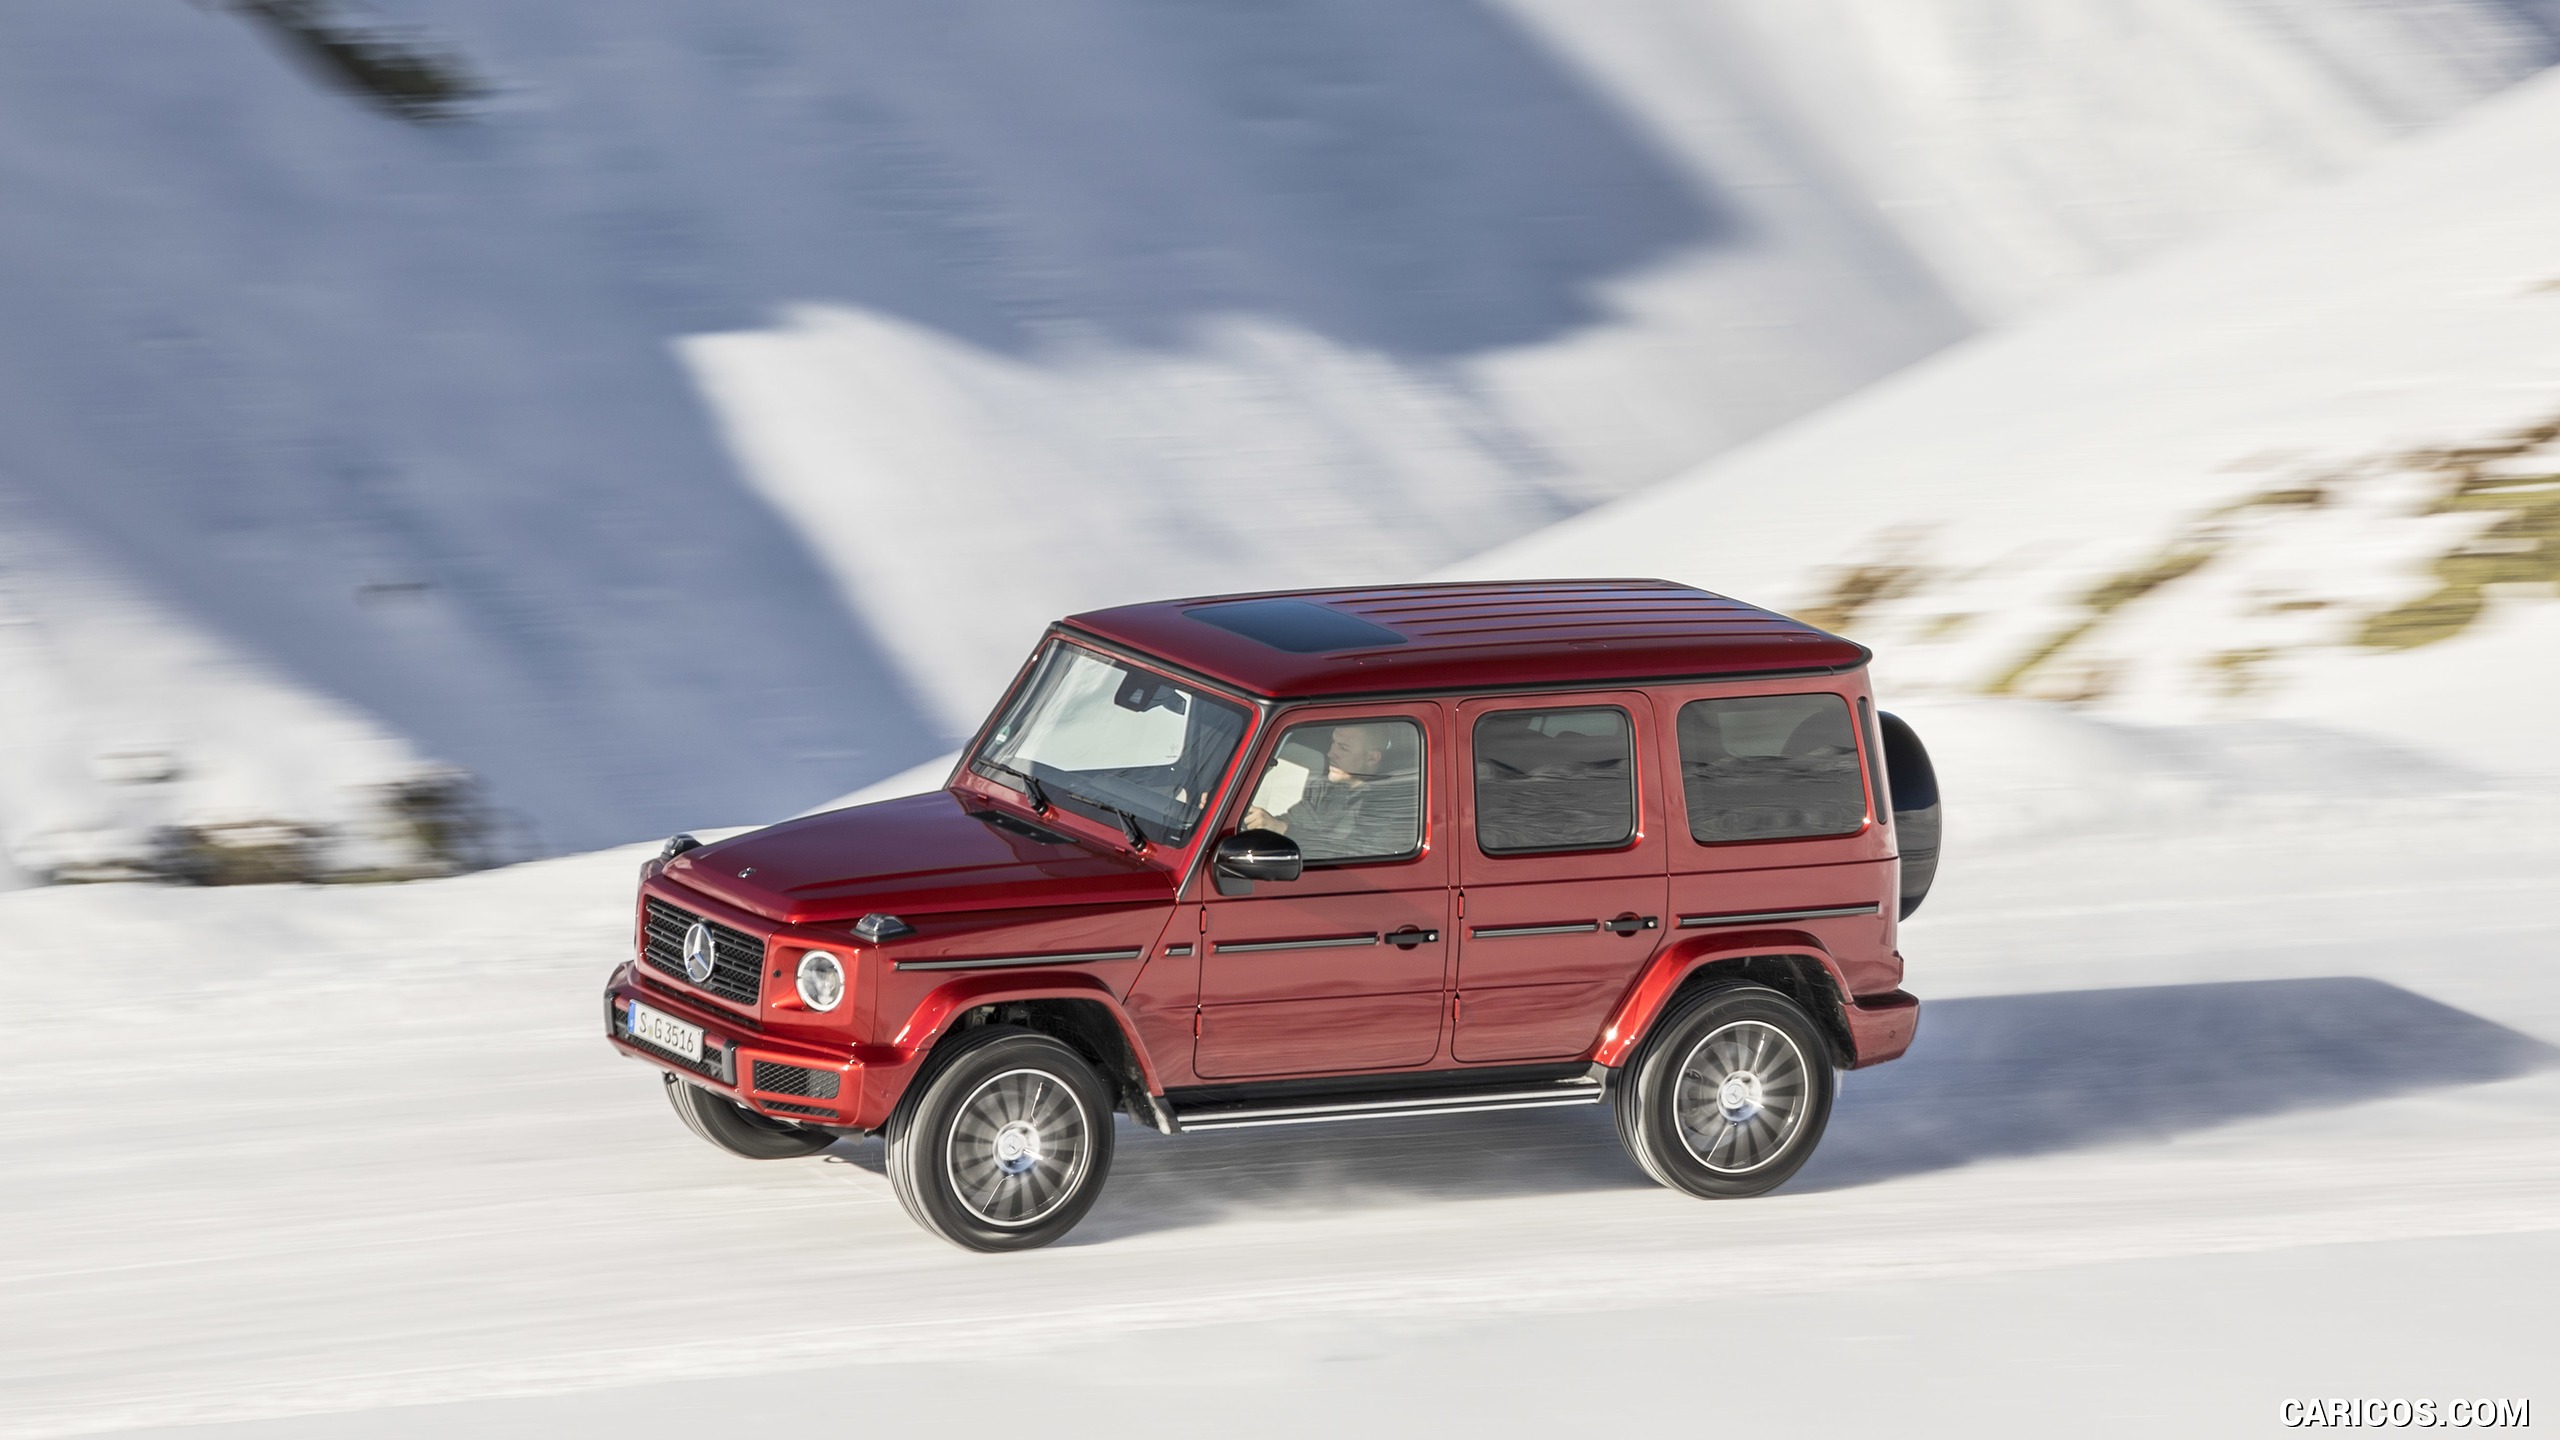 2019 Mercedes-Benz G 350 d (Designo Hyazinth Red Metallic) - In Snow - Front Three-Quarter, #4 of 51